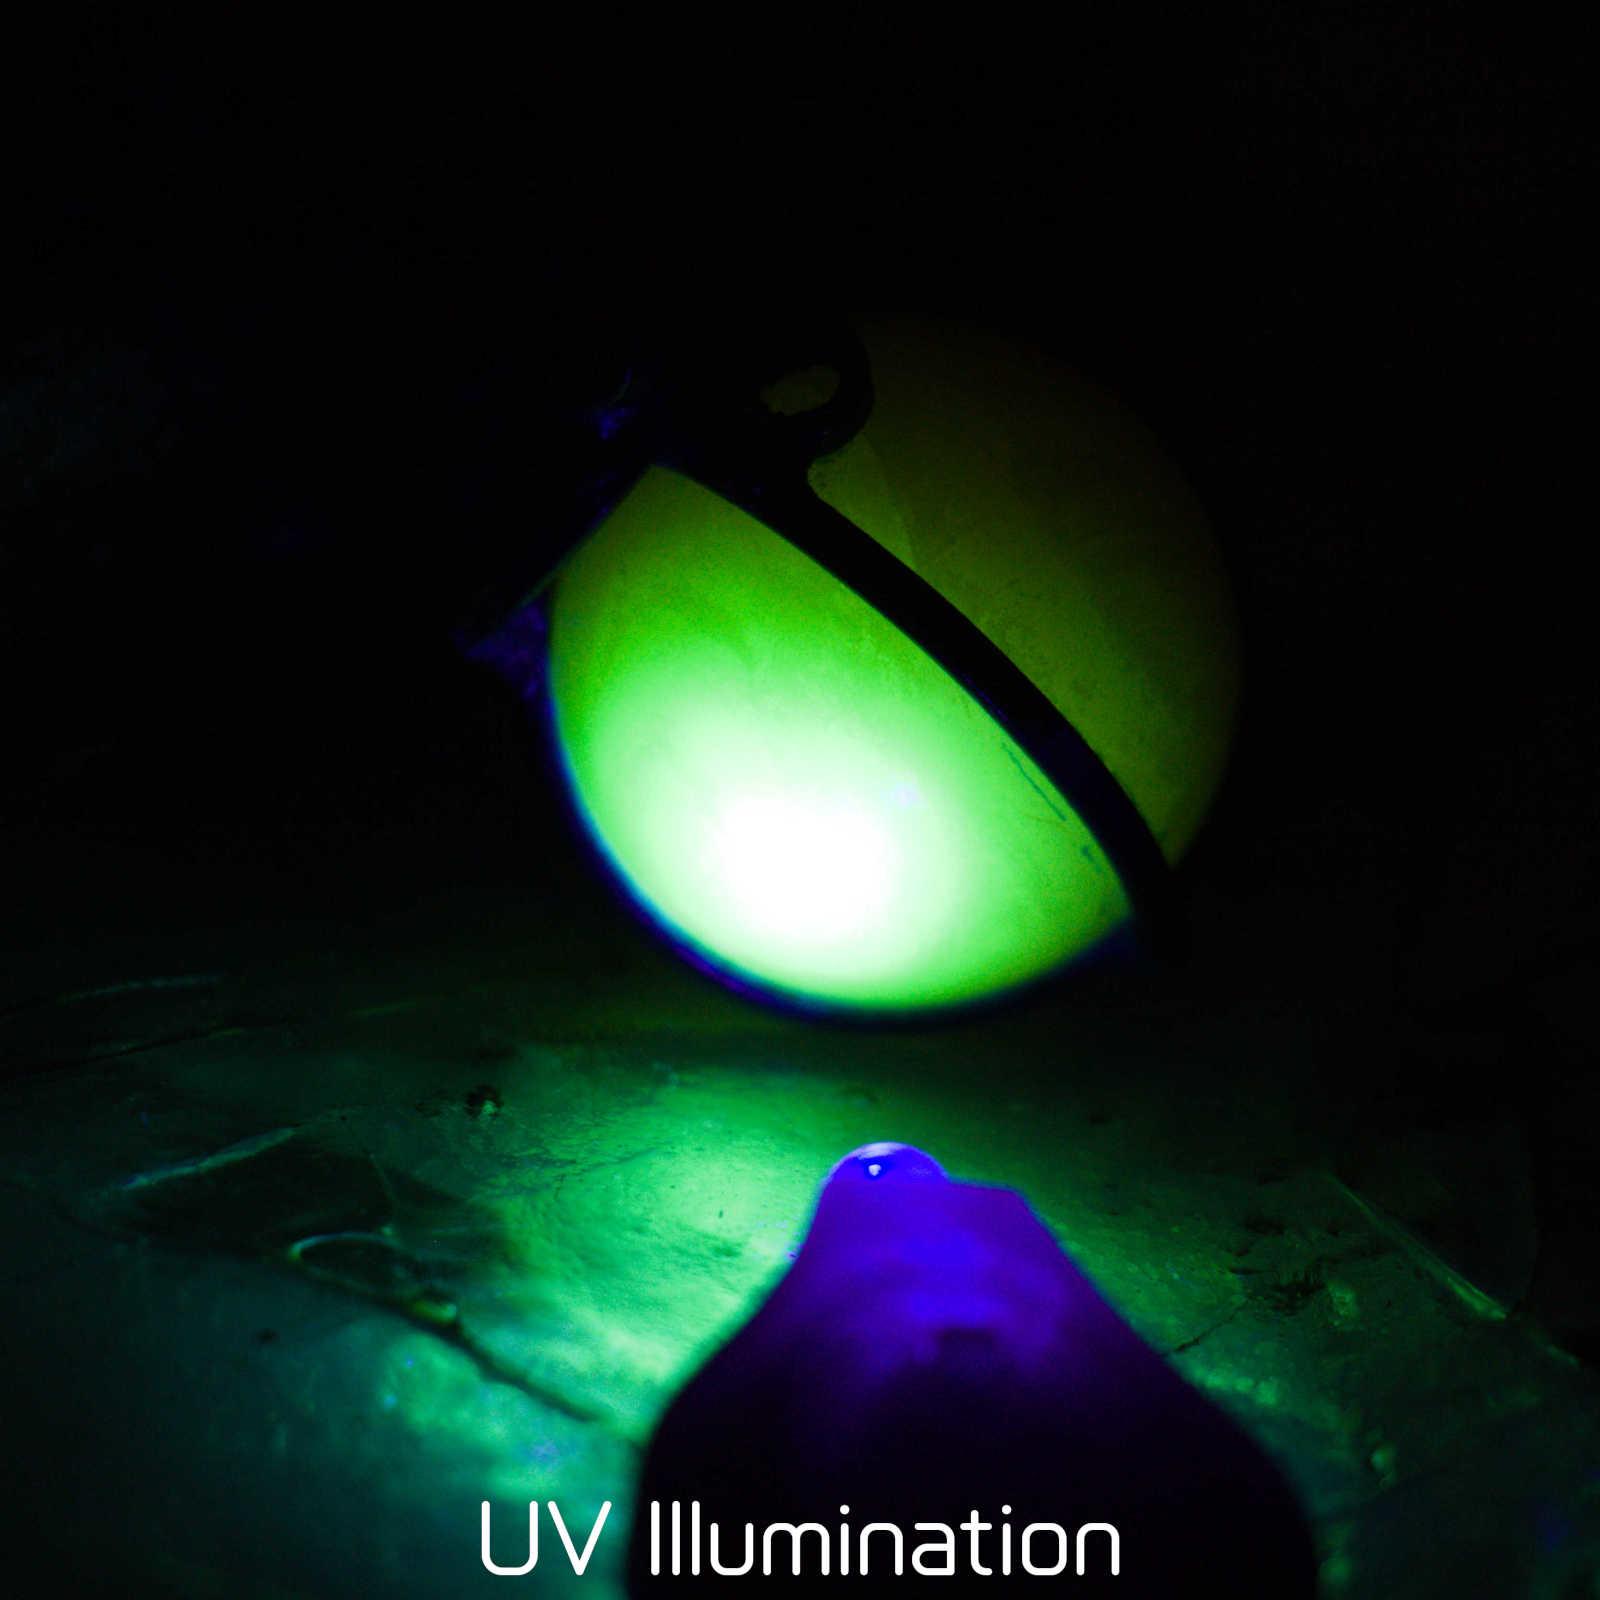 captured Uranium glass marble under UV light